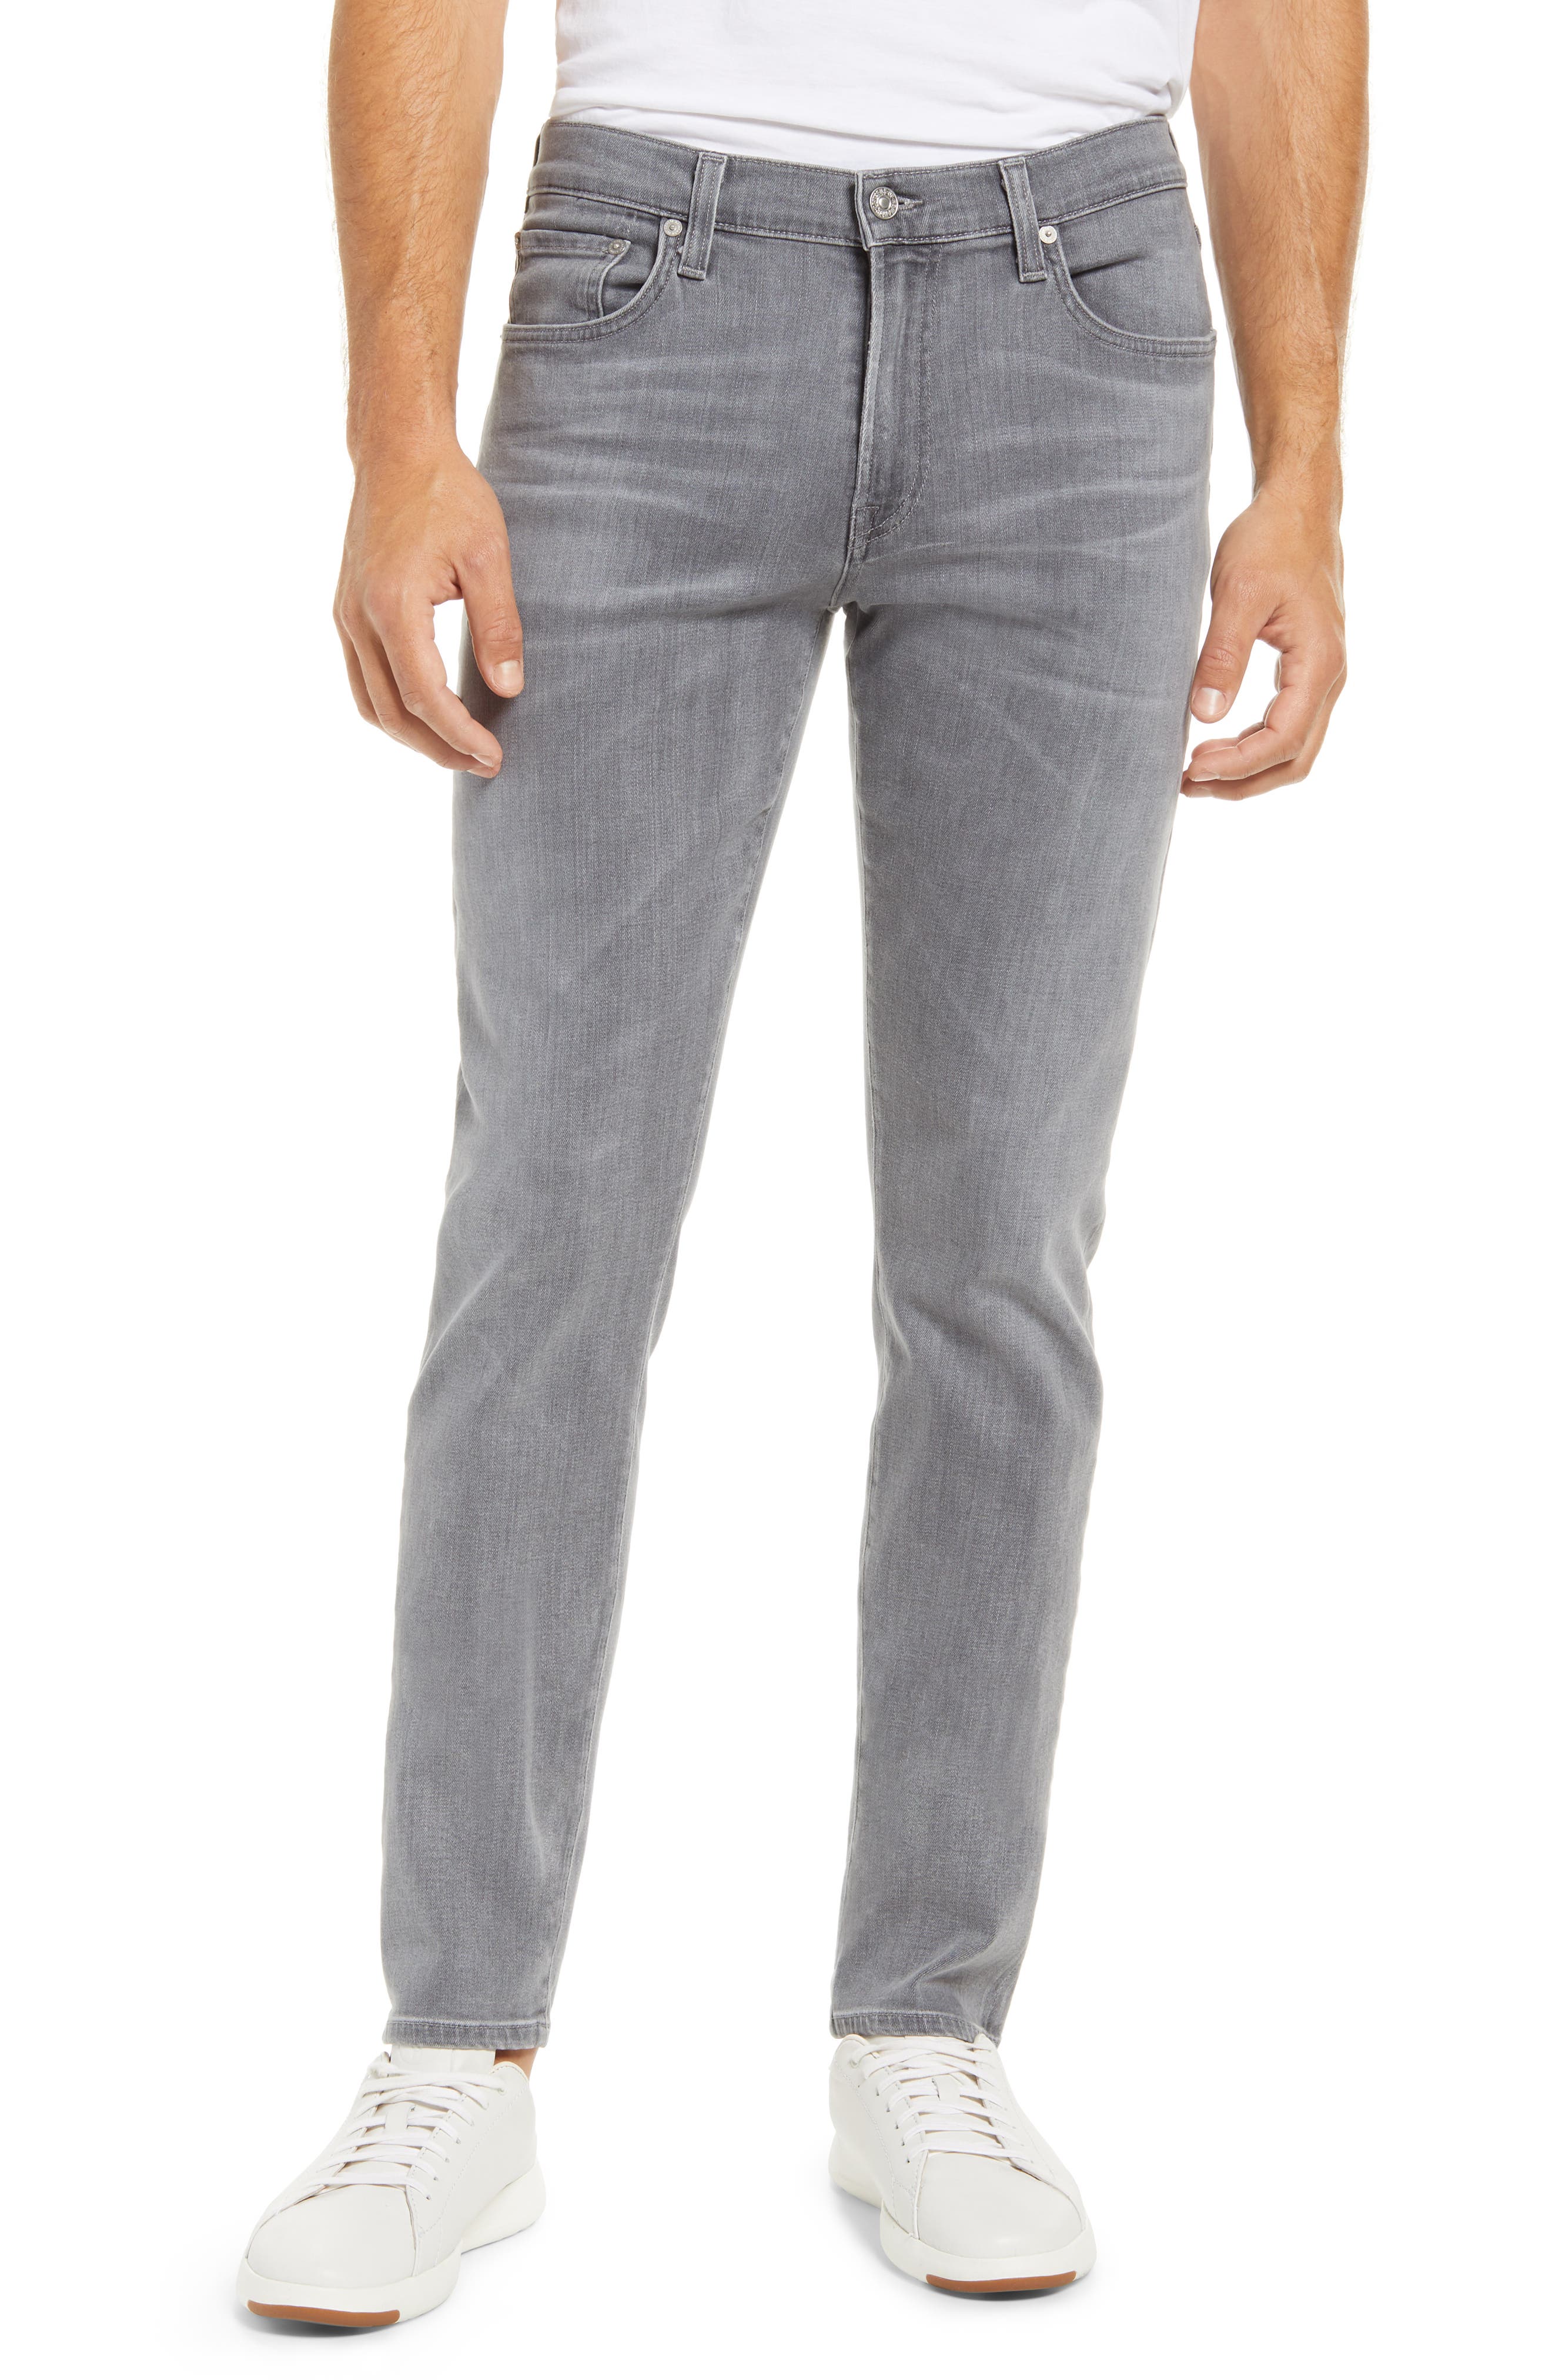 nordstrom grey jeans